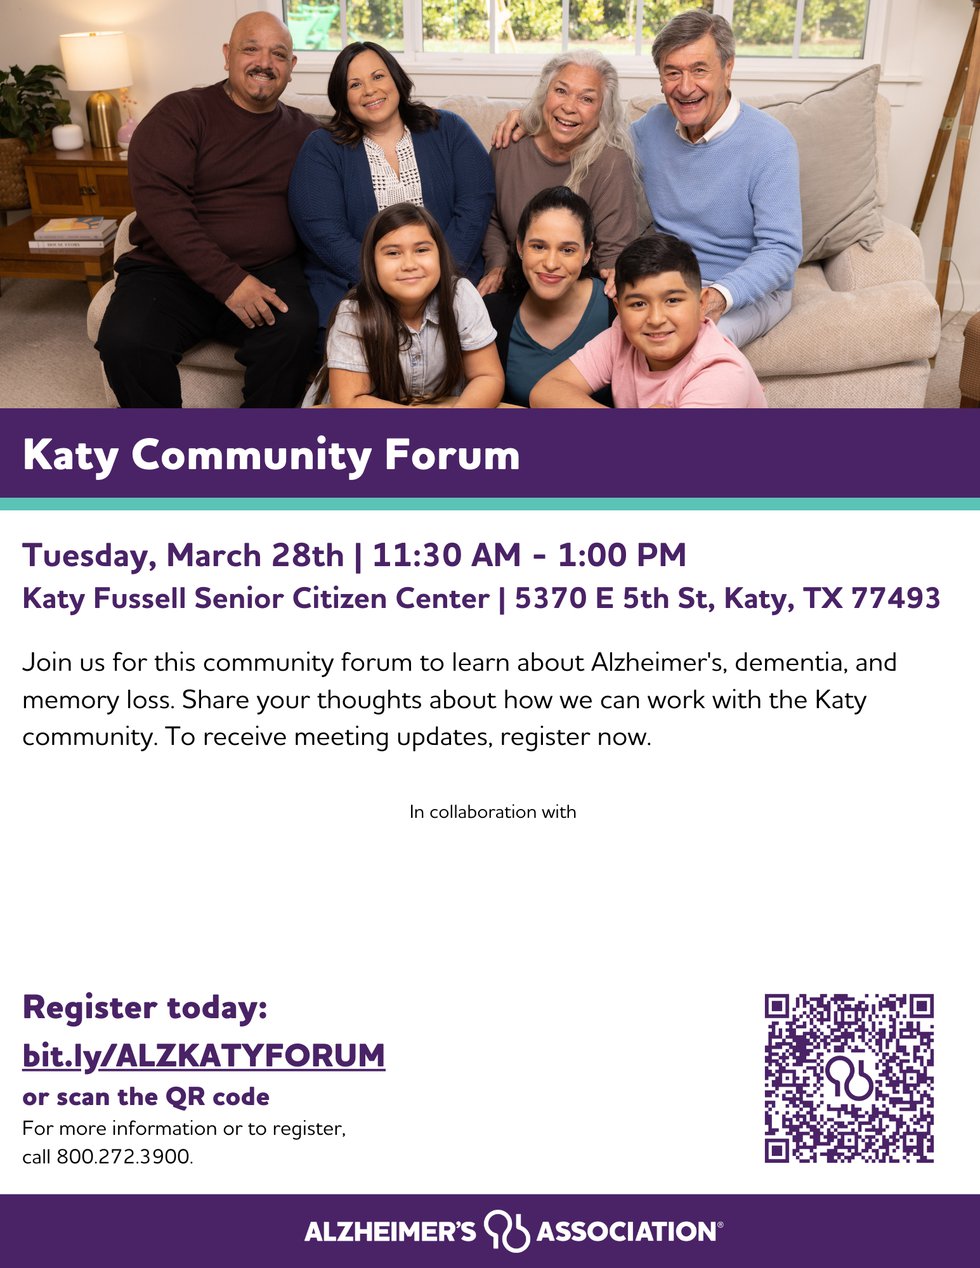 Katy Community Forum.png